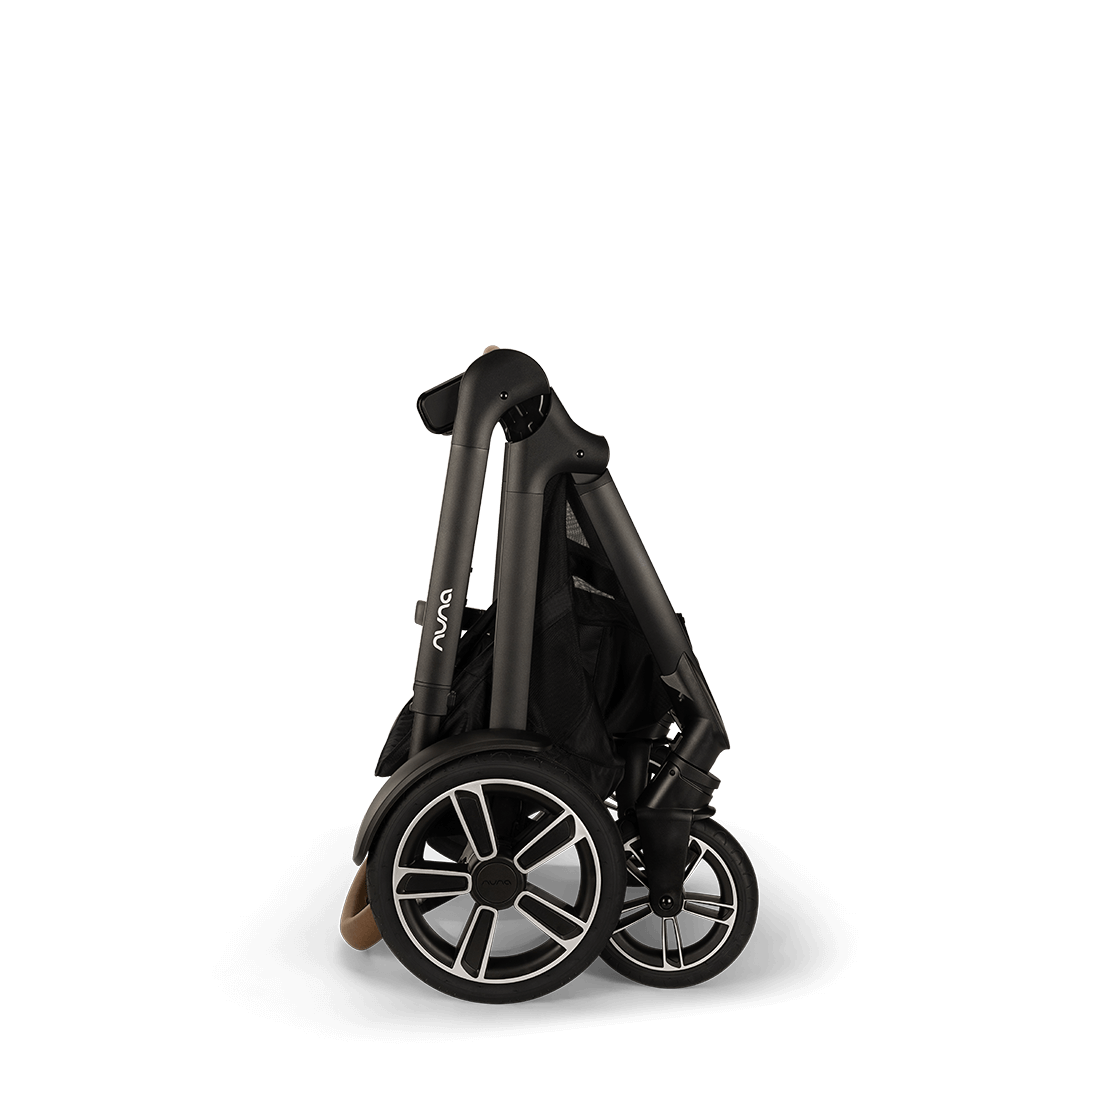 DEMI Next Stroller with Rider Board - Caviar